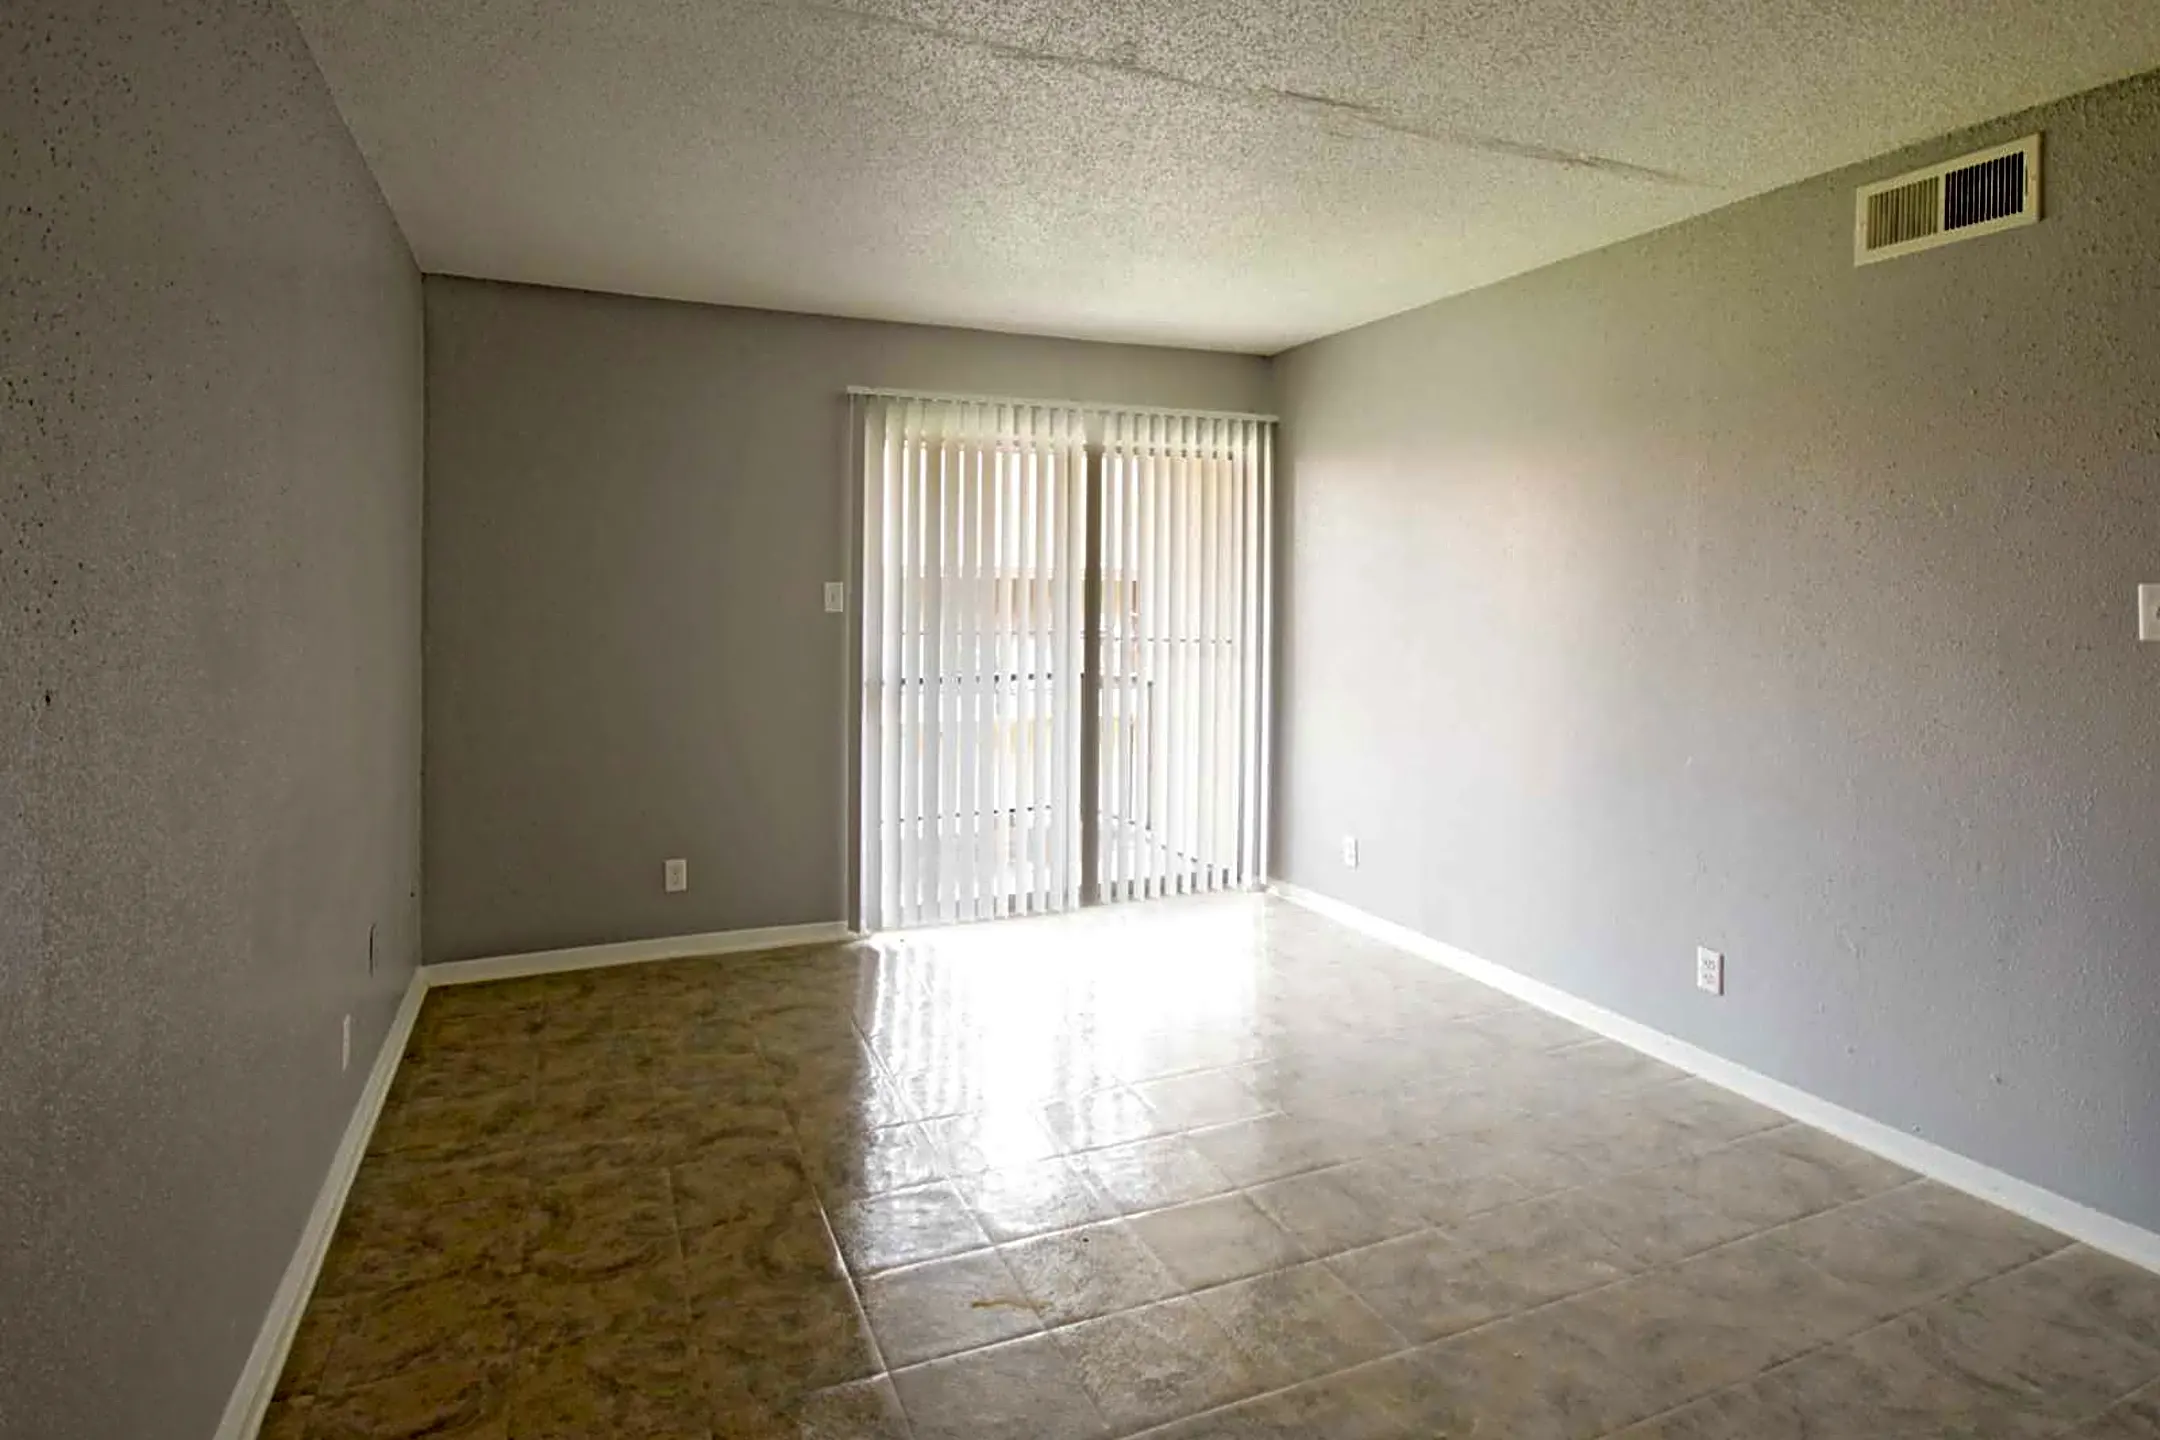 Living Room - Port Arthur Park Apartments - Port Arthur, TX